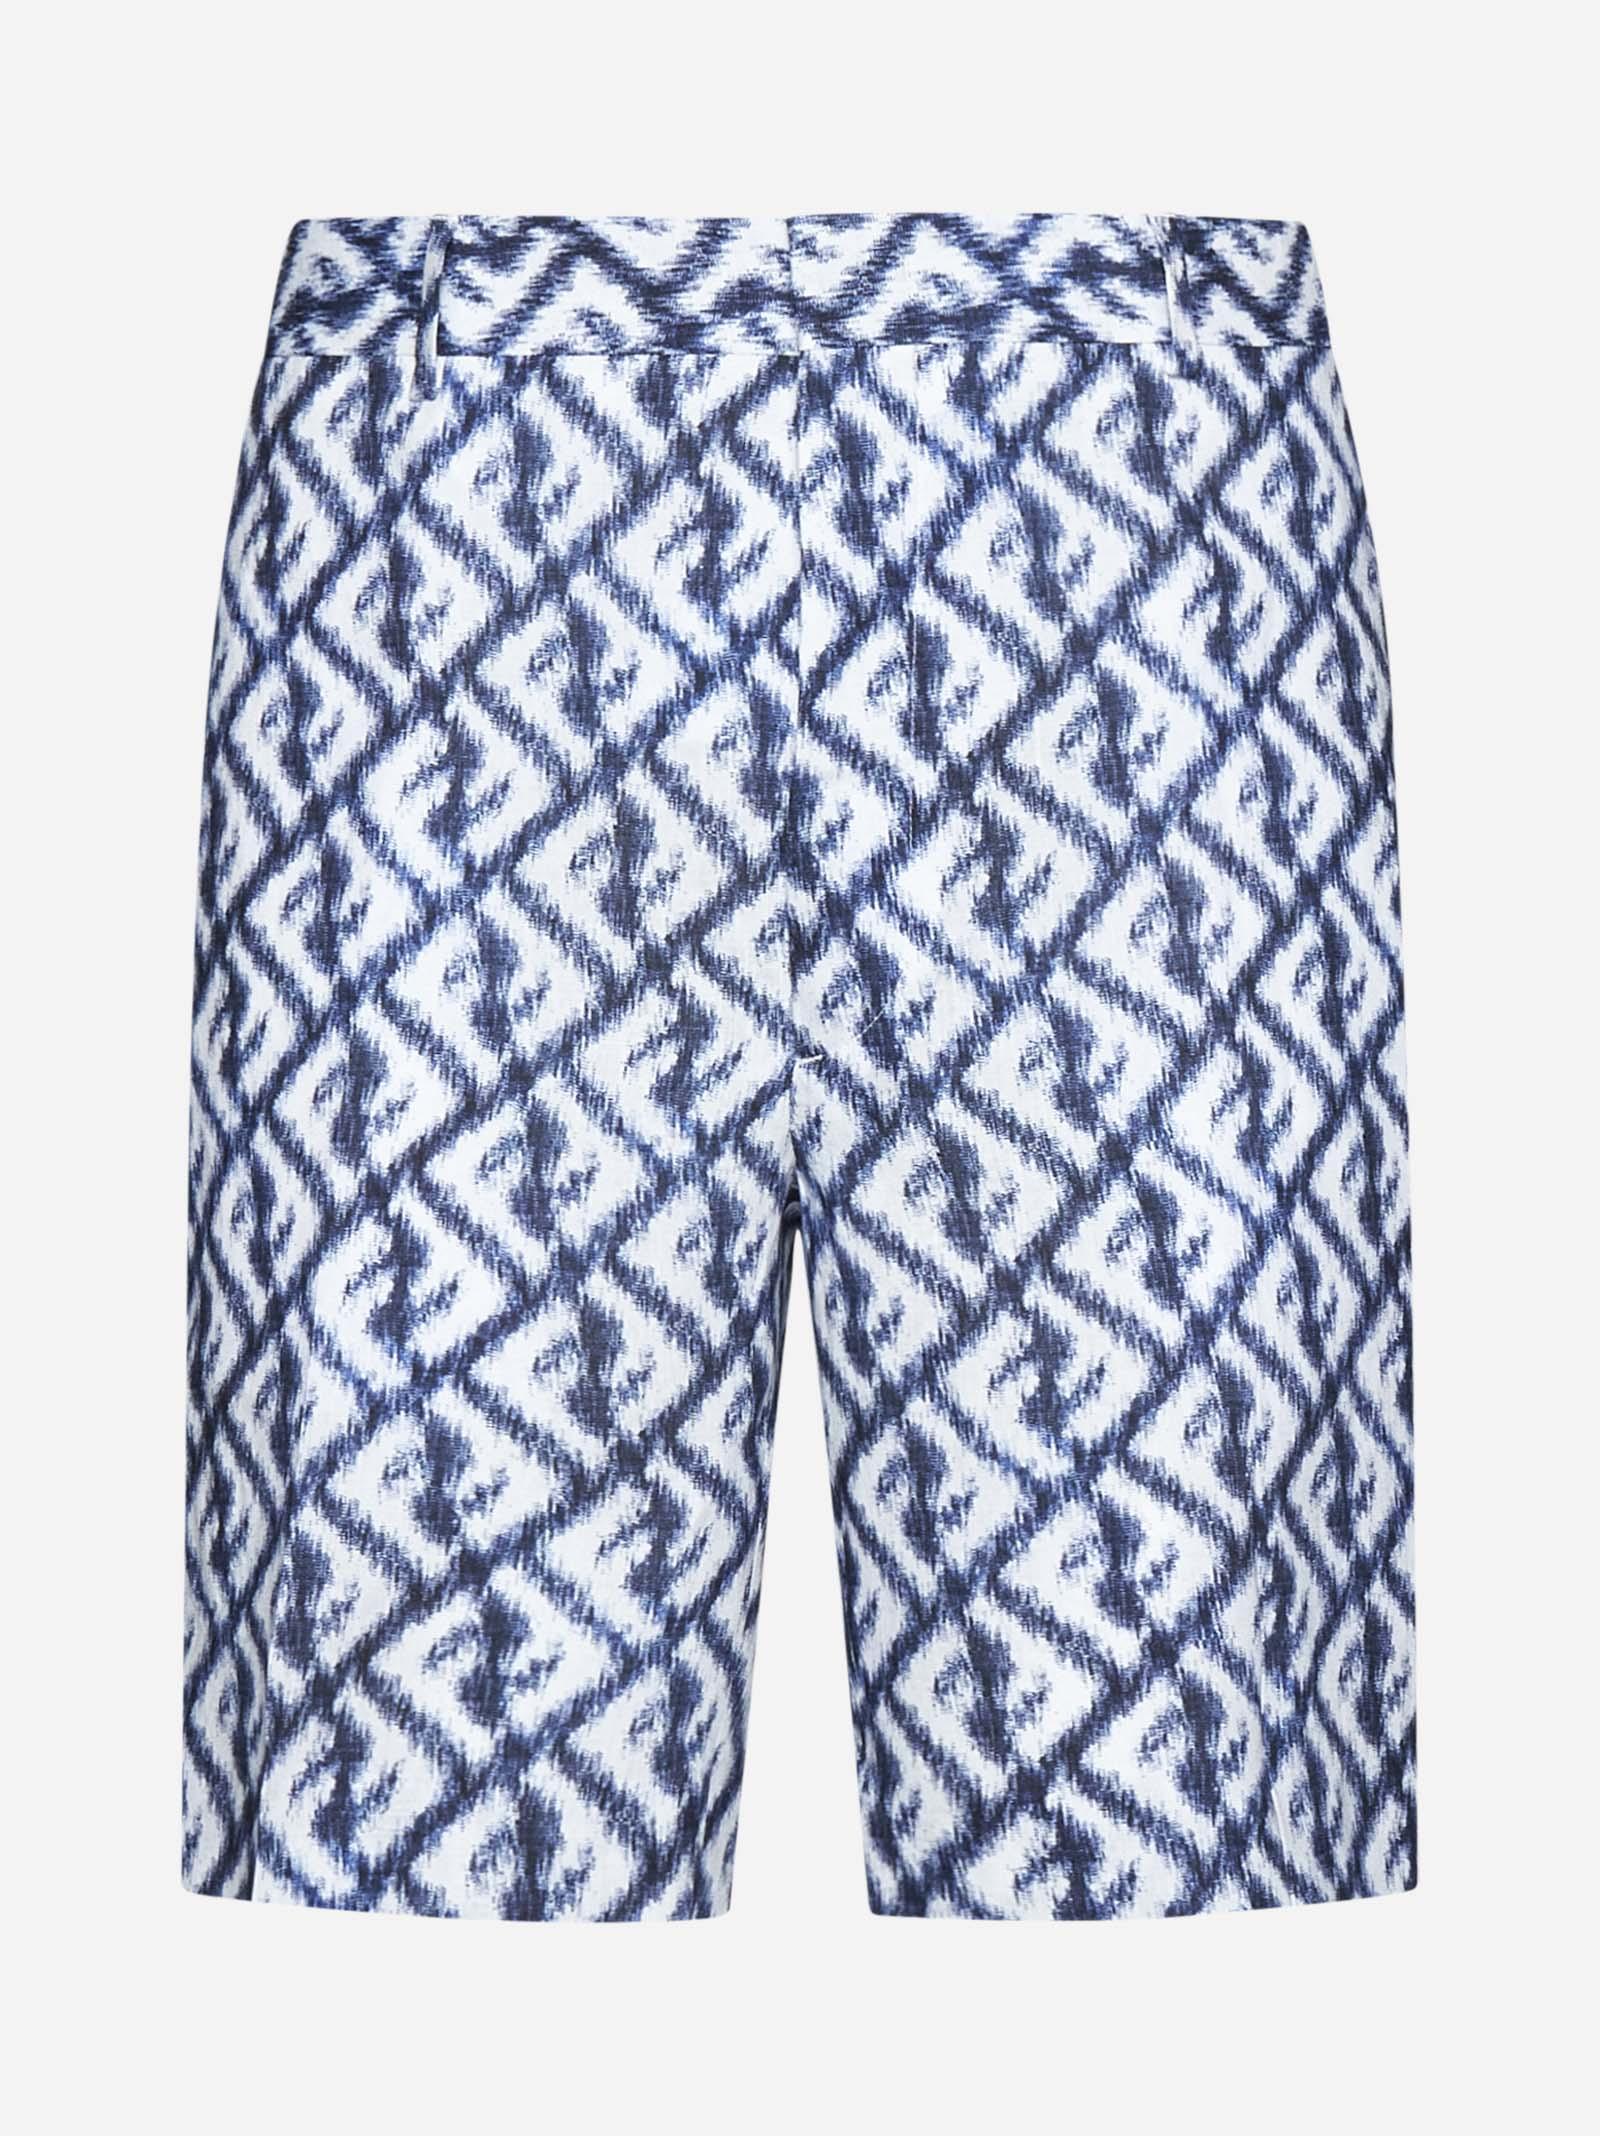 Fendi Ff Print Linen Shorts